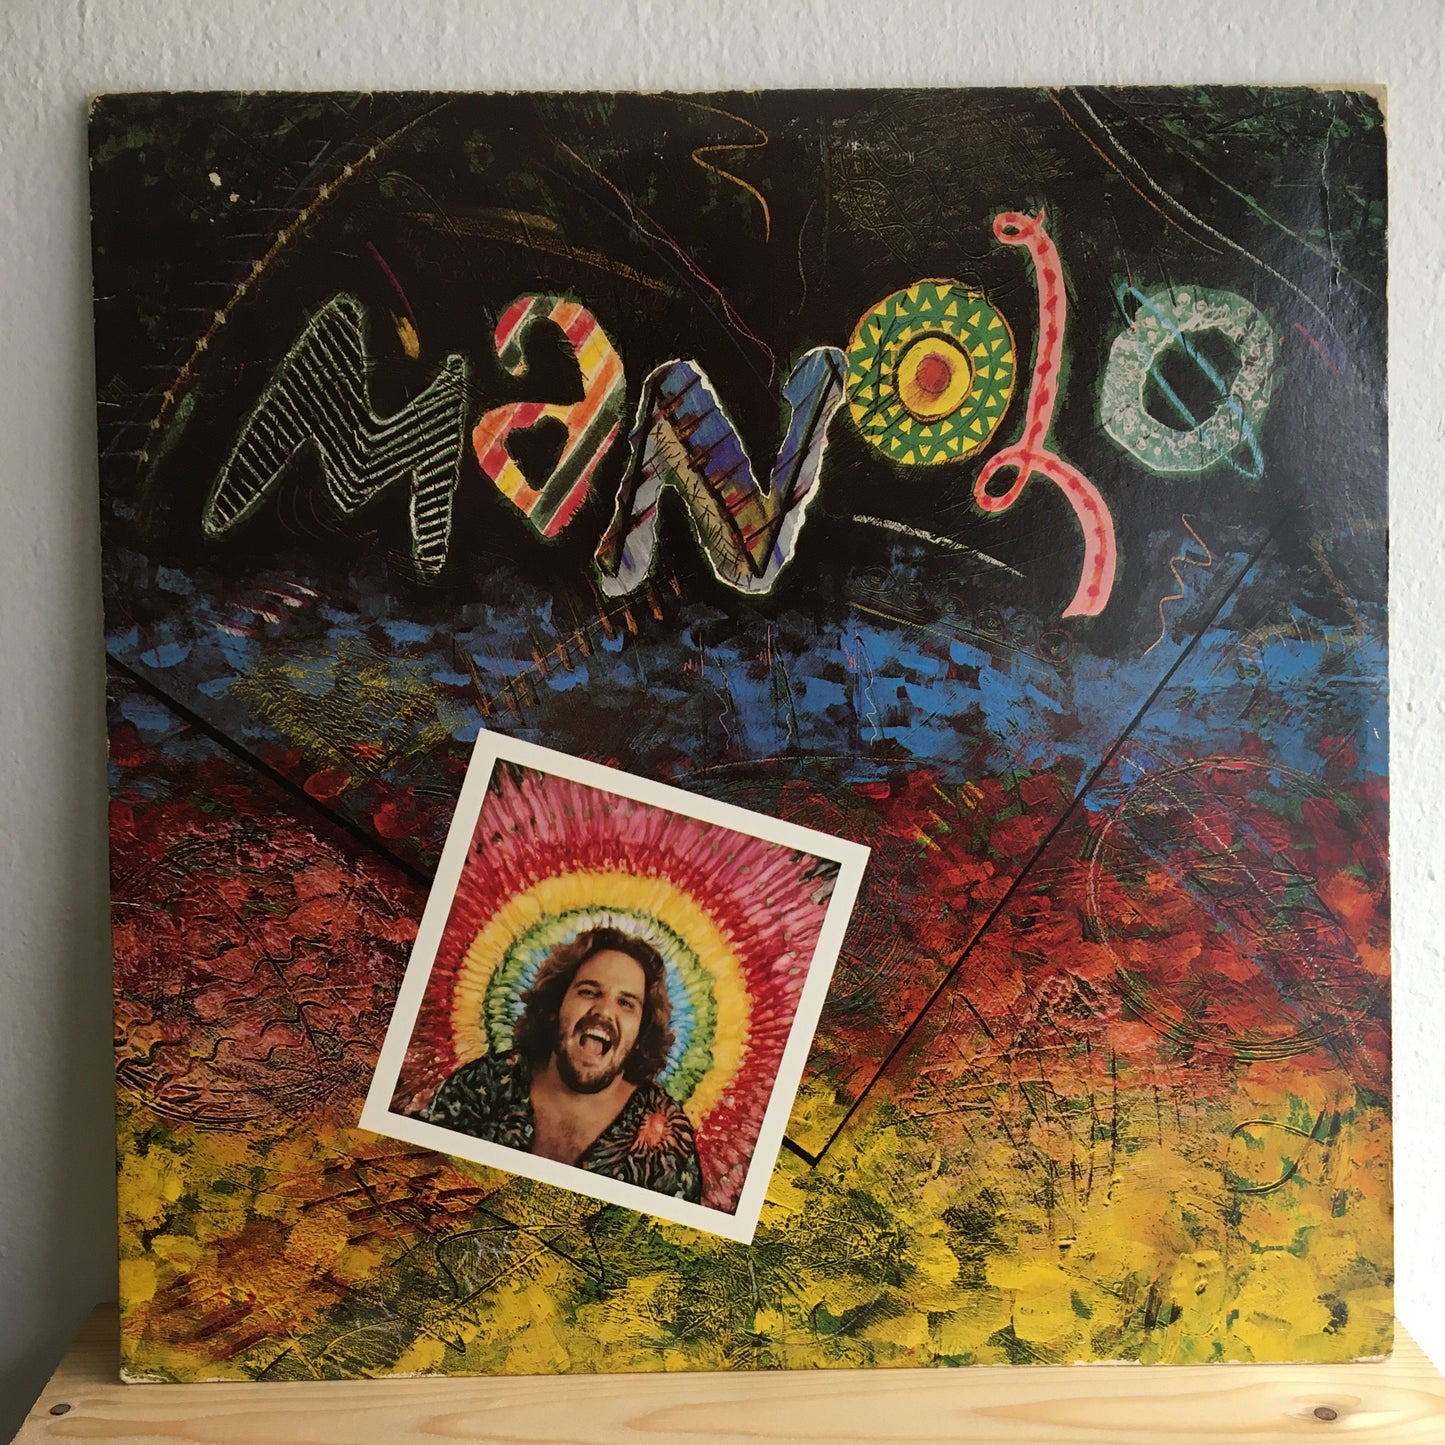 Manolo – Manolo